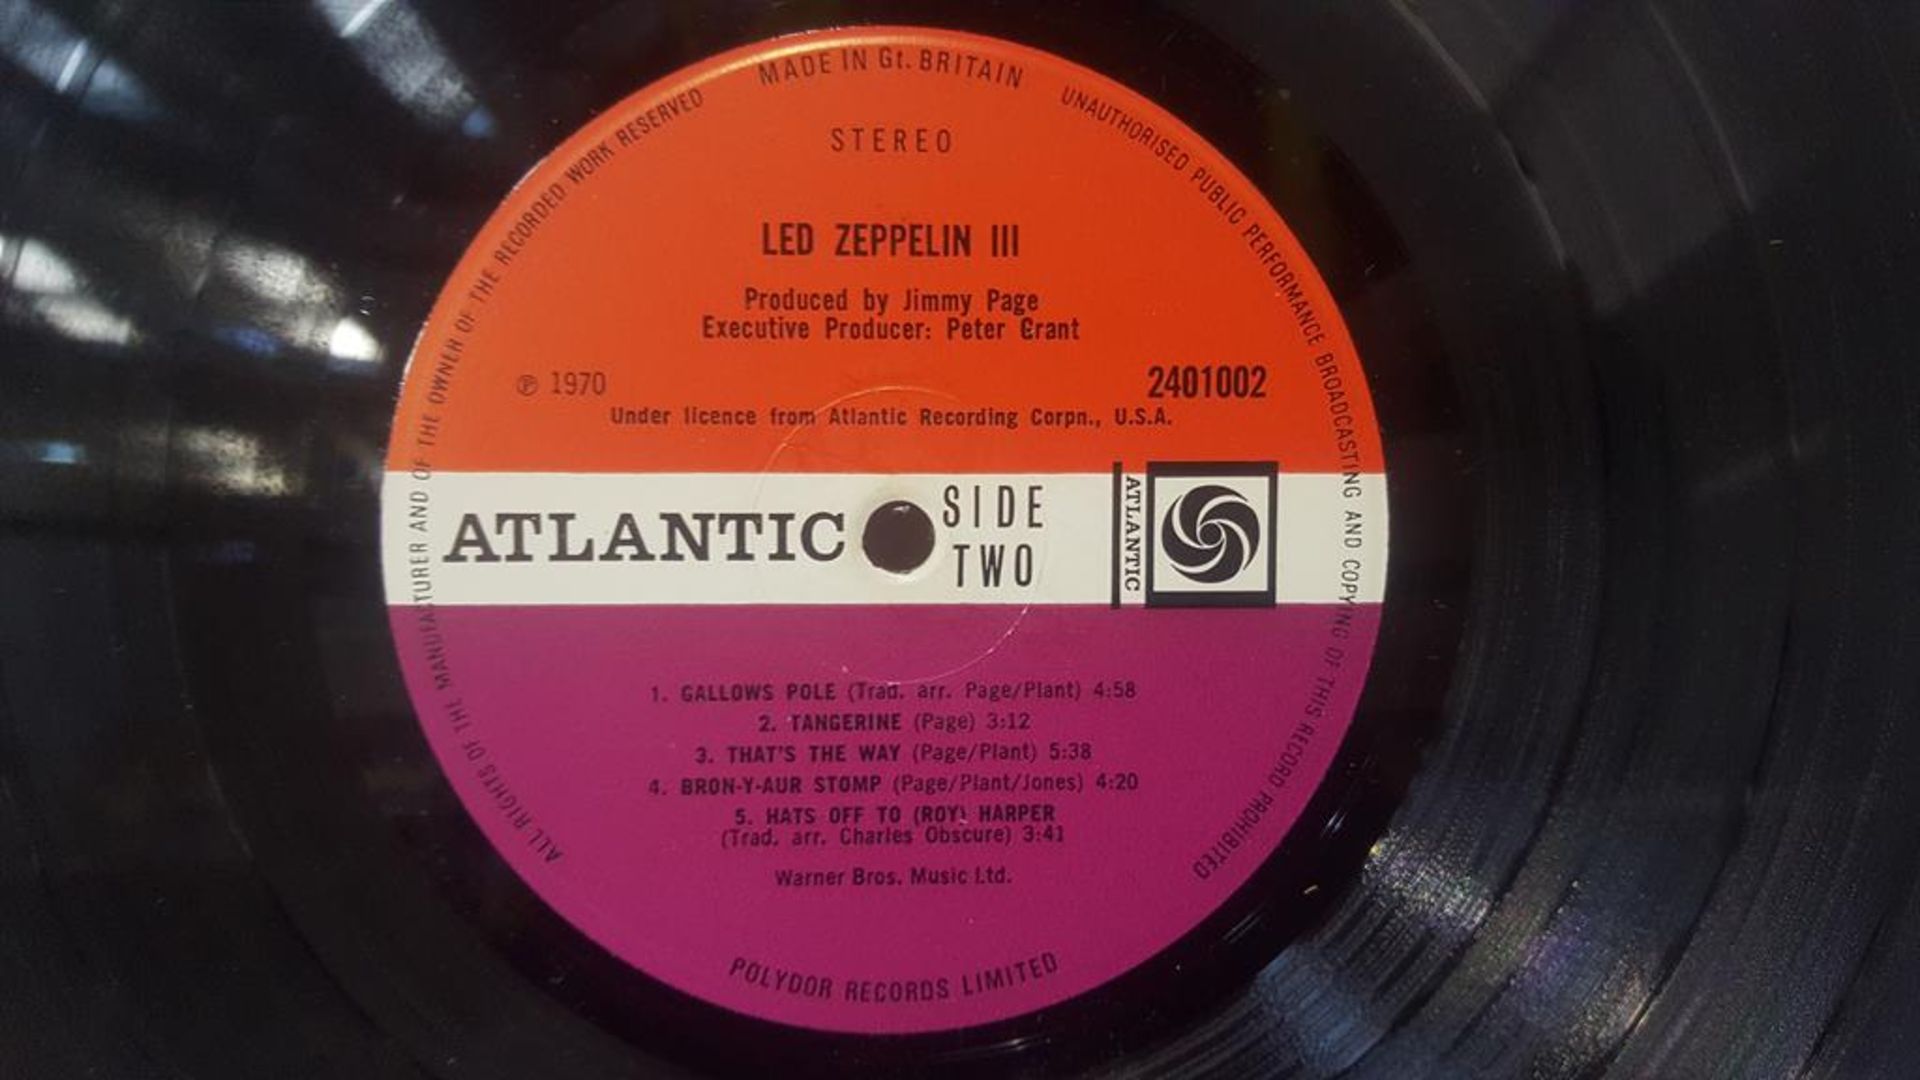 Led Zeppelin '111' LP - Image 7 of 8